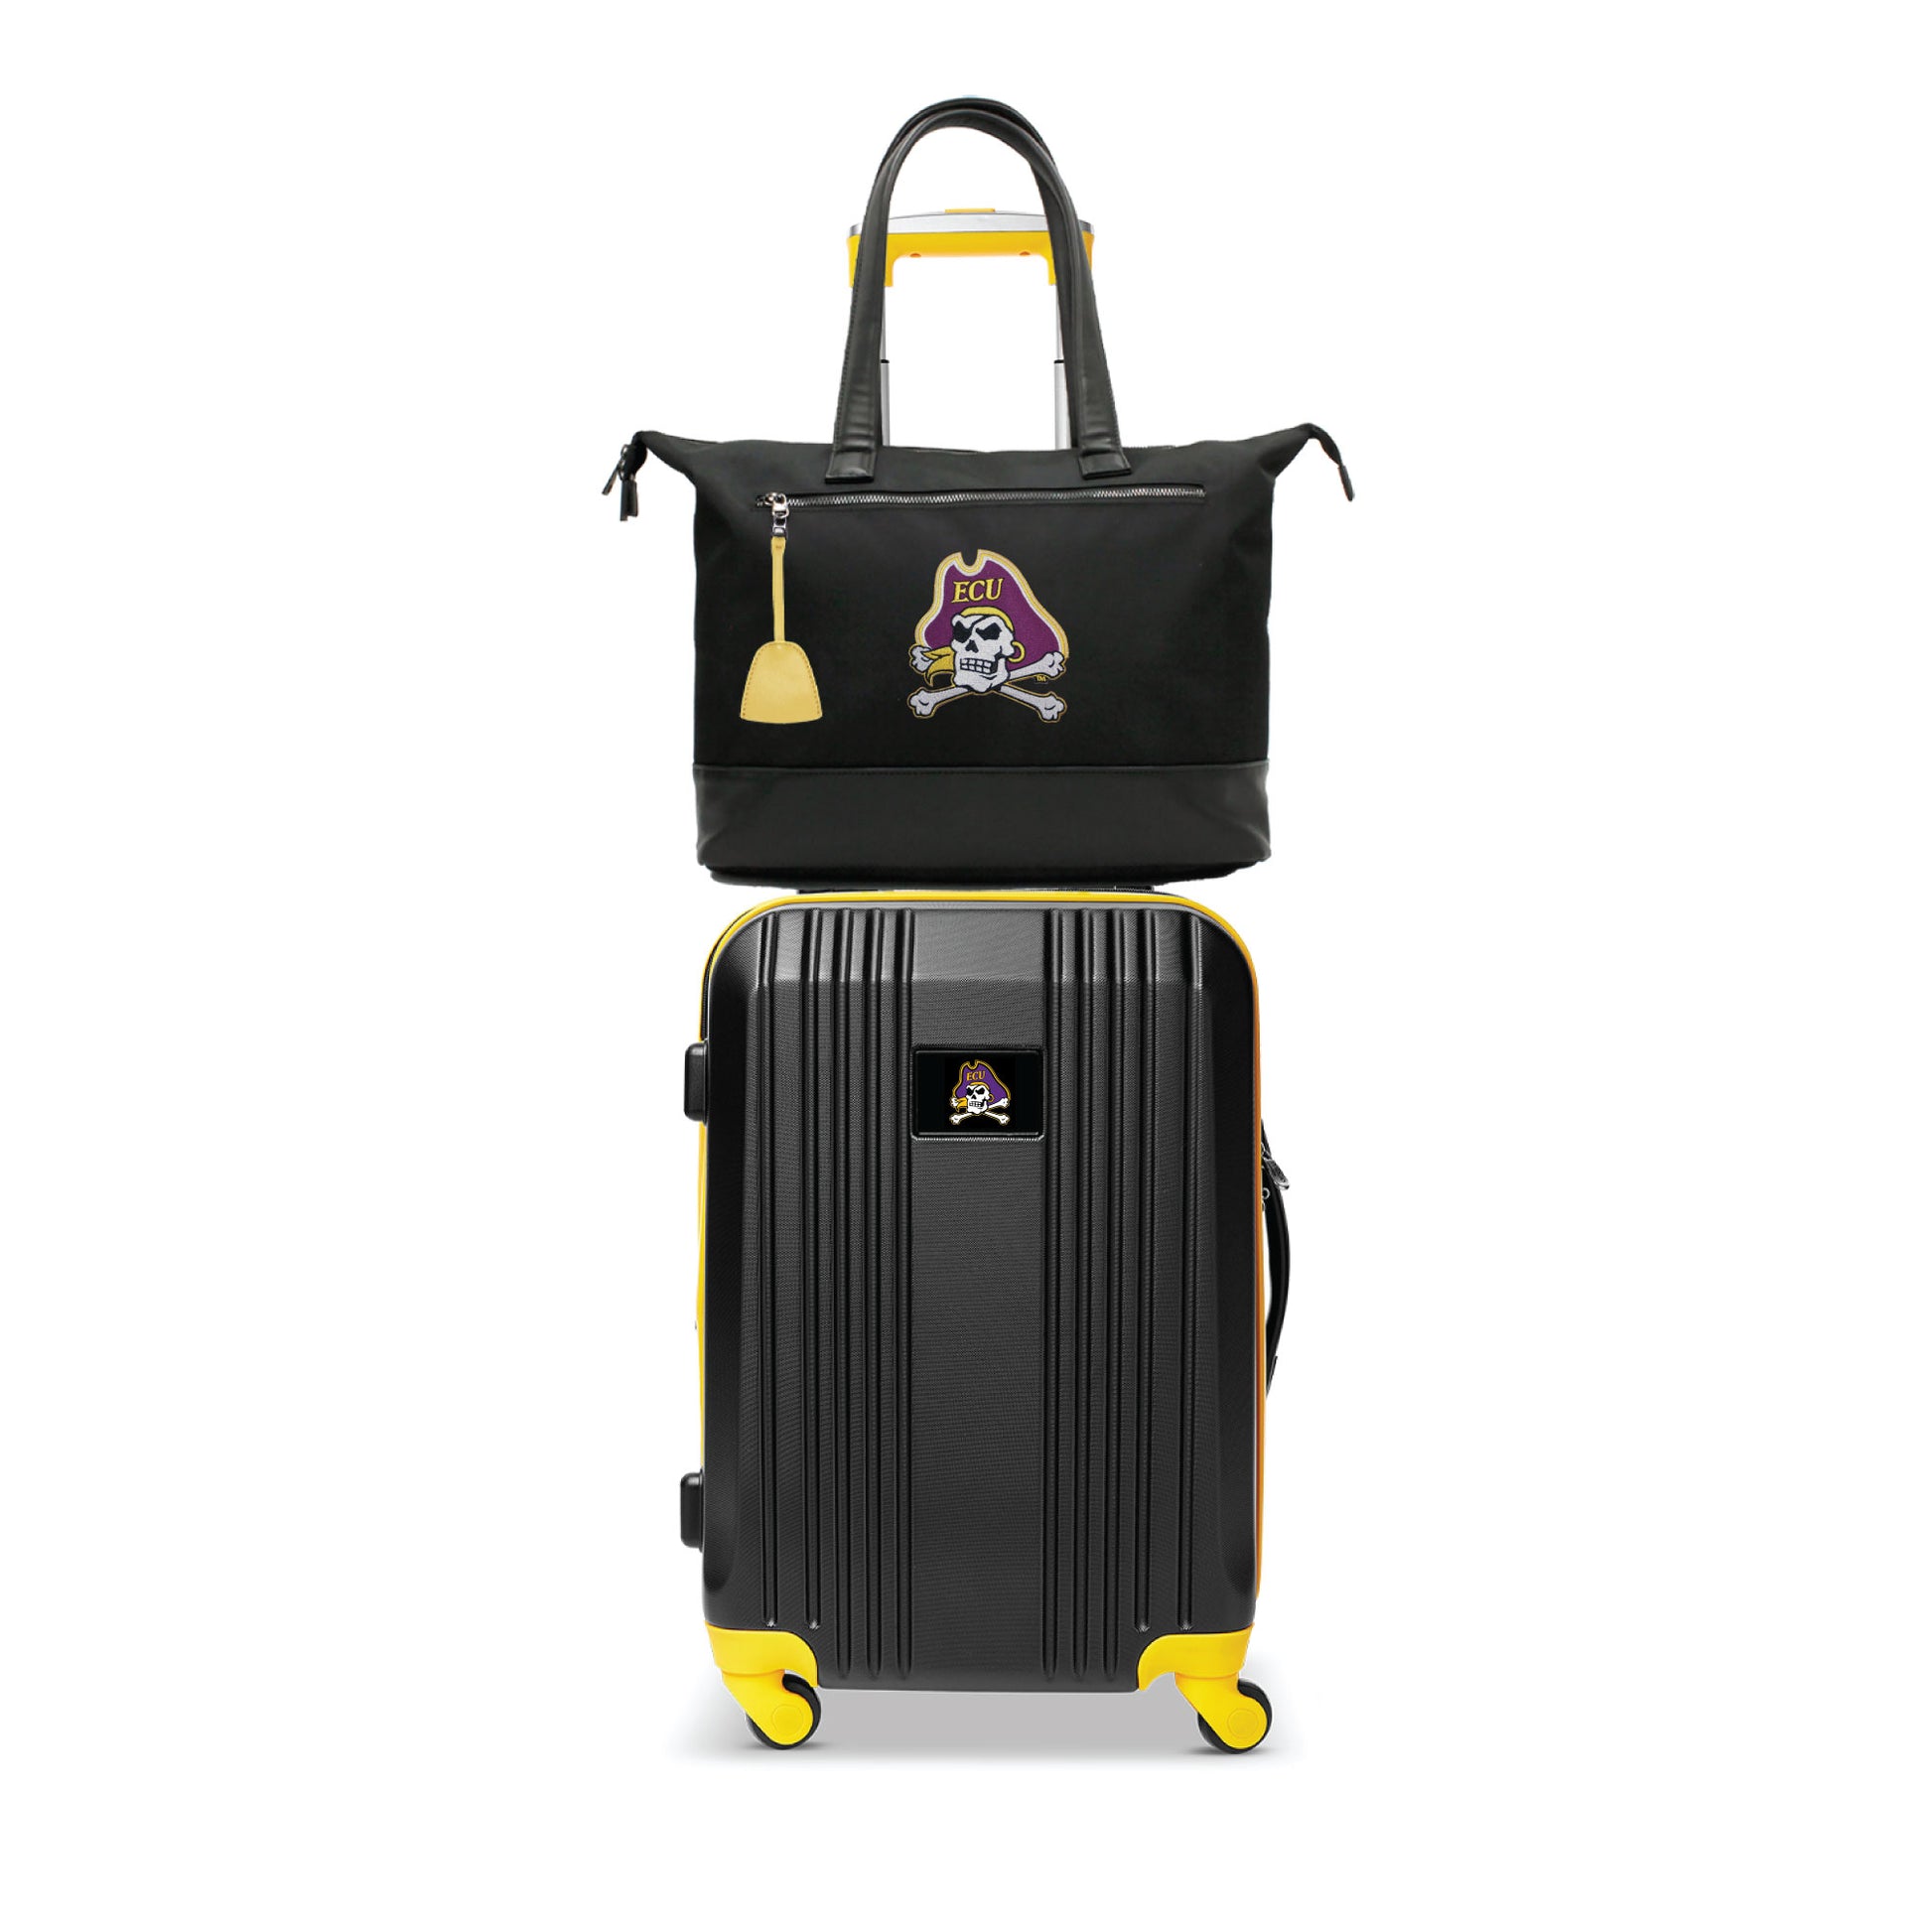 East Carolina Pirates Premium Laptop Tote Bag and Luggage Set